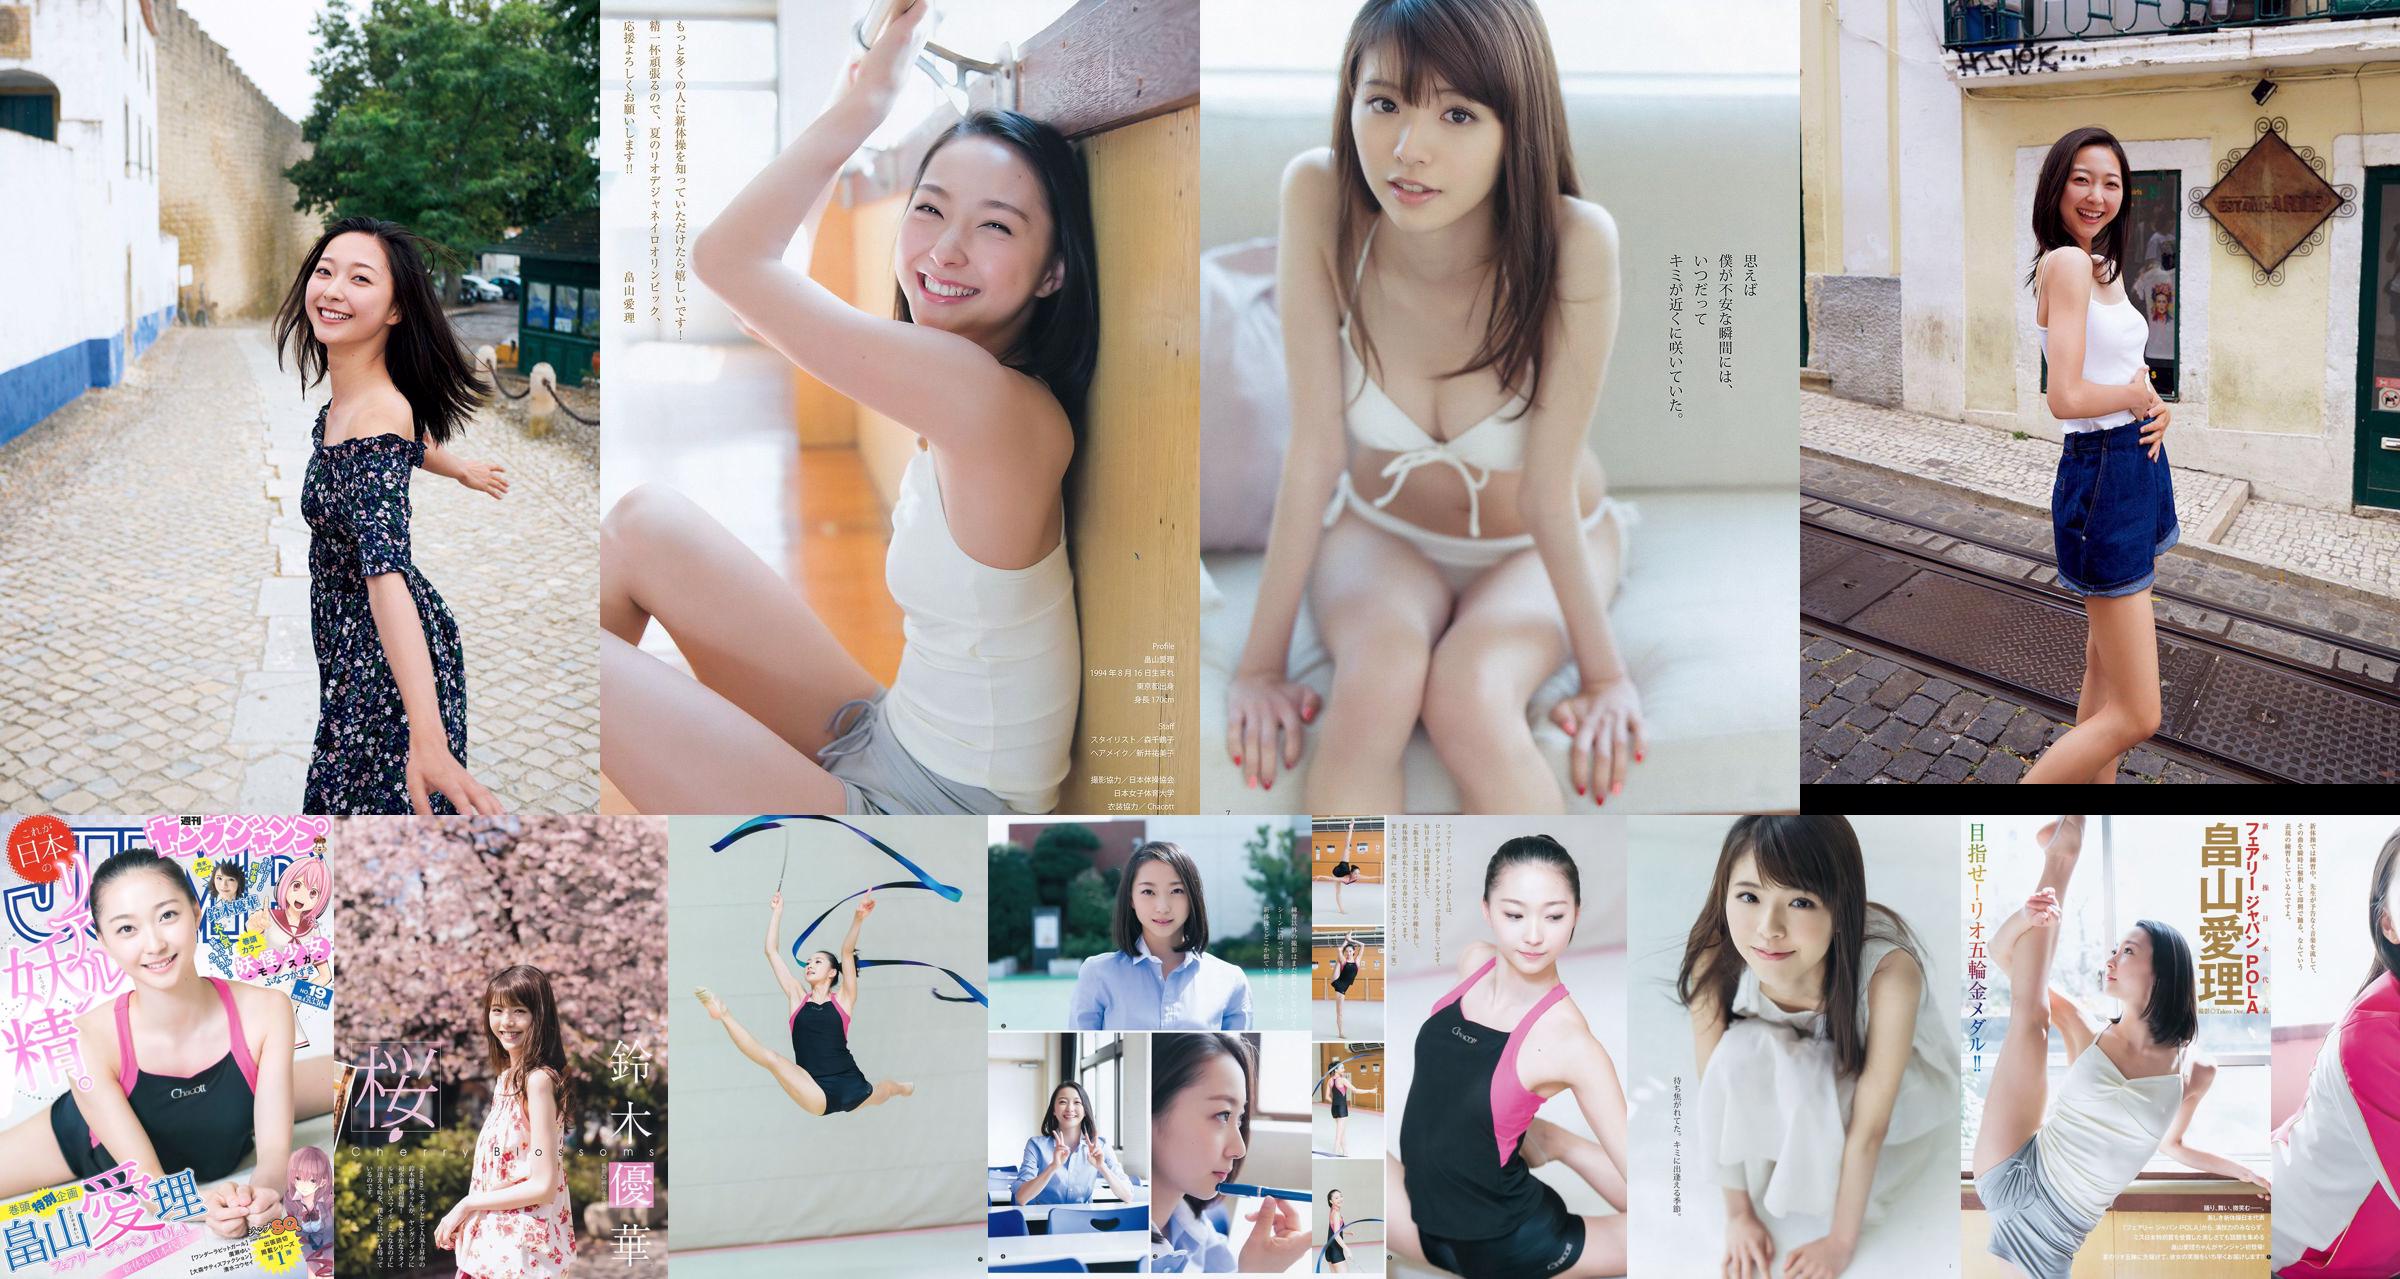 [ENTAME] Mai Shiraishi Nanase Nishino Rena Shimada Yui Takano Edición de marzo de 2014 Fotografía No.87d87b Página 1